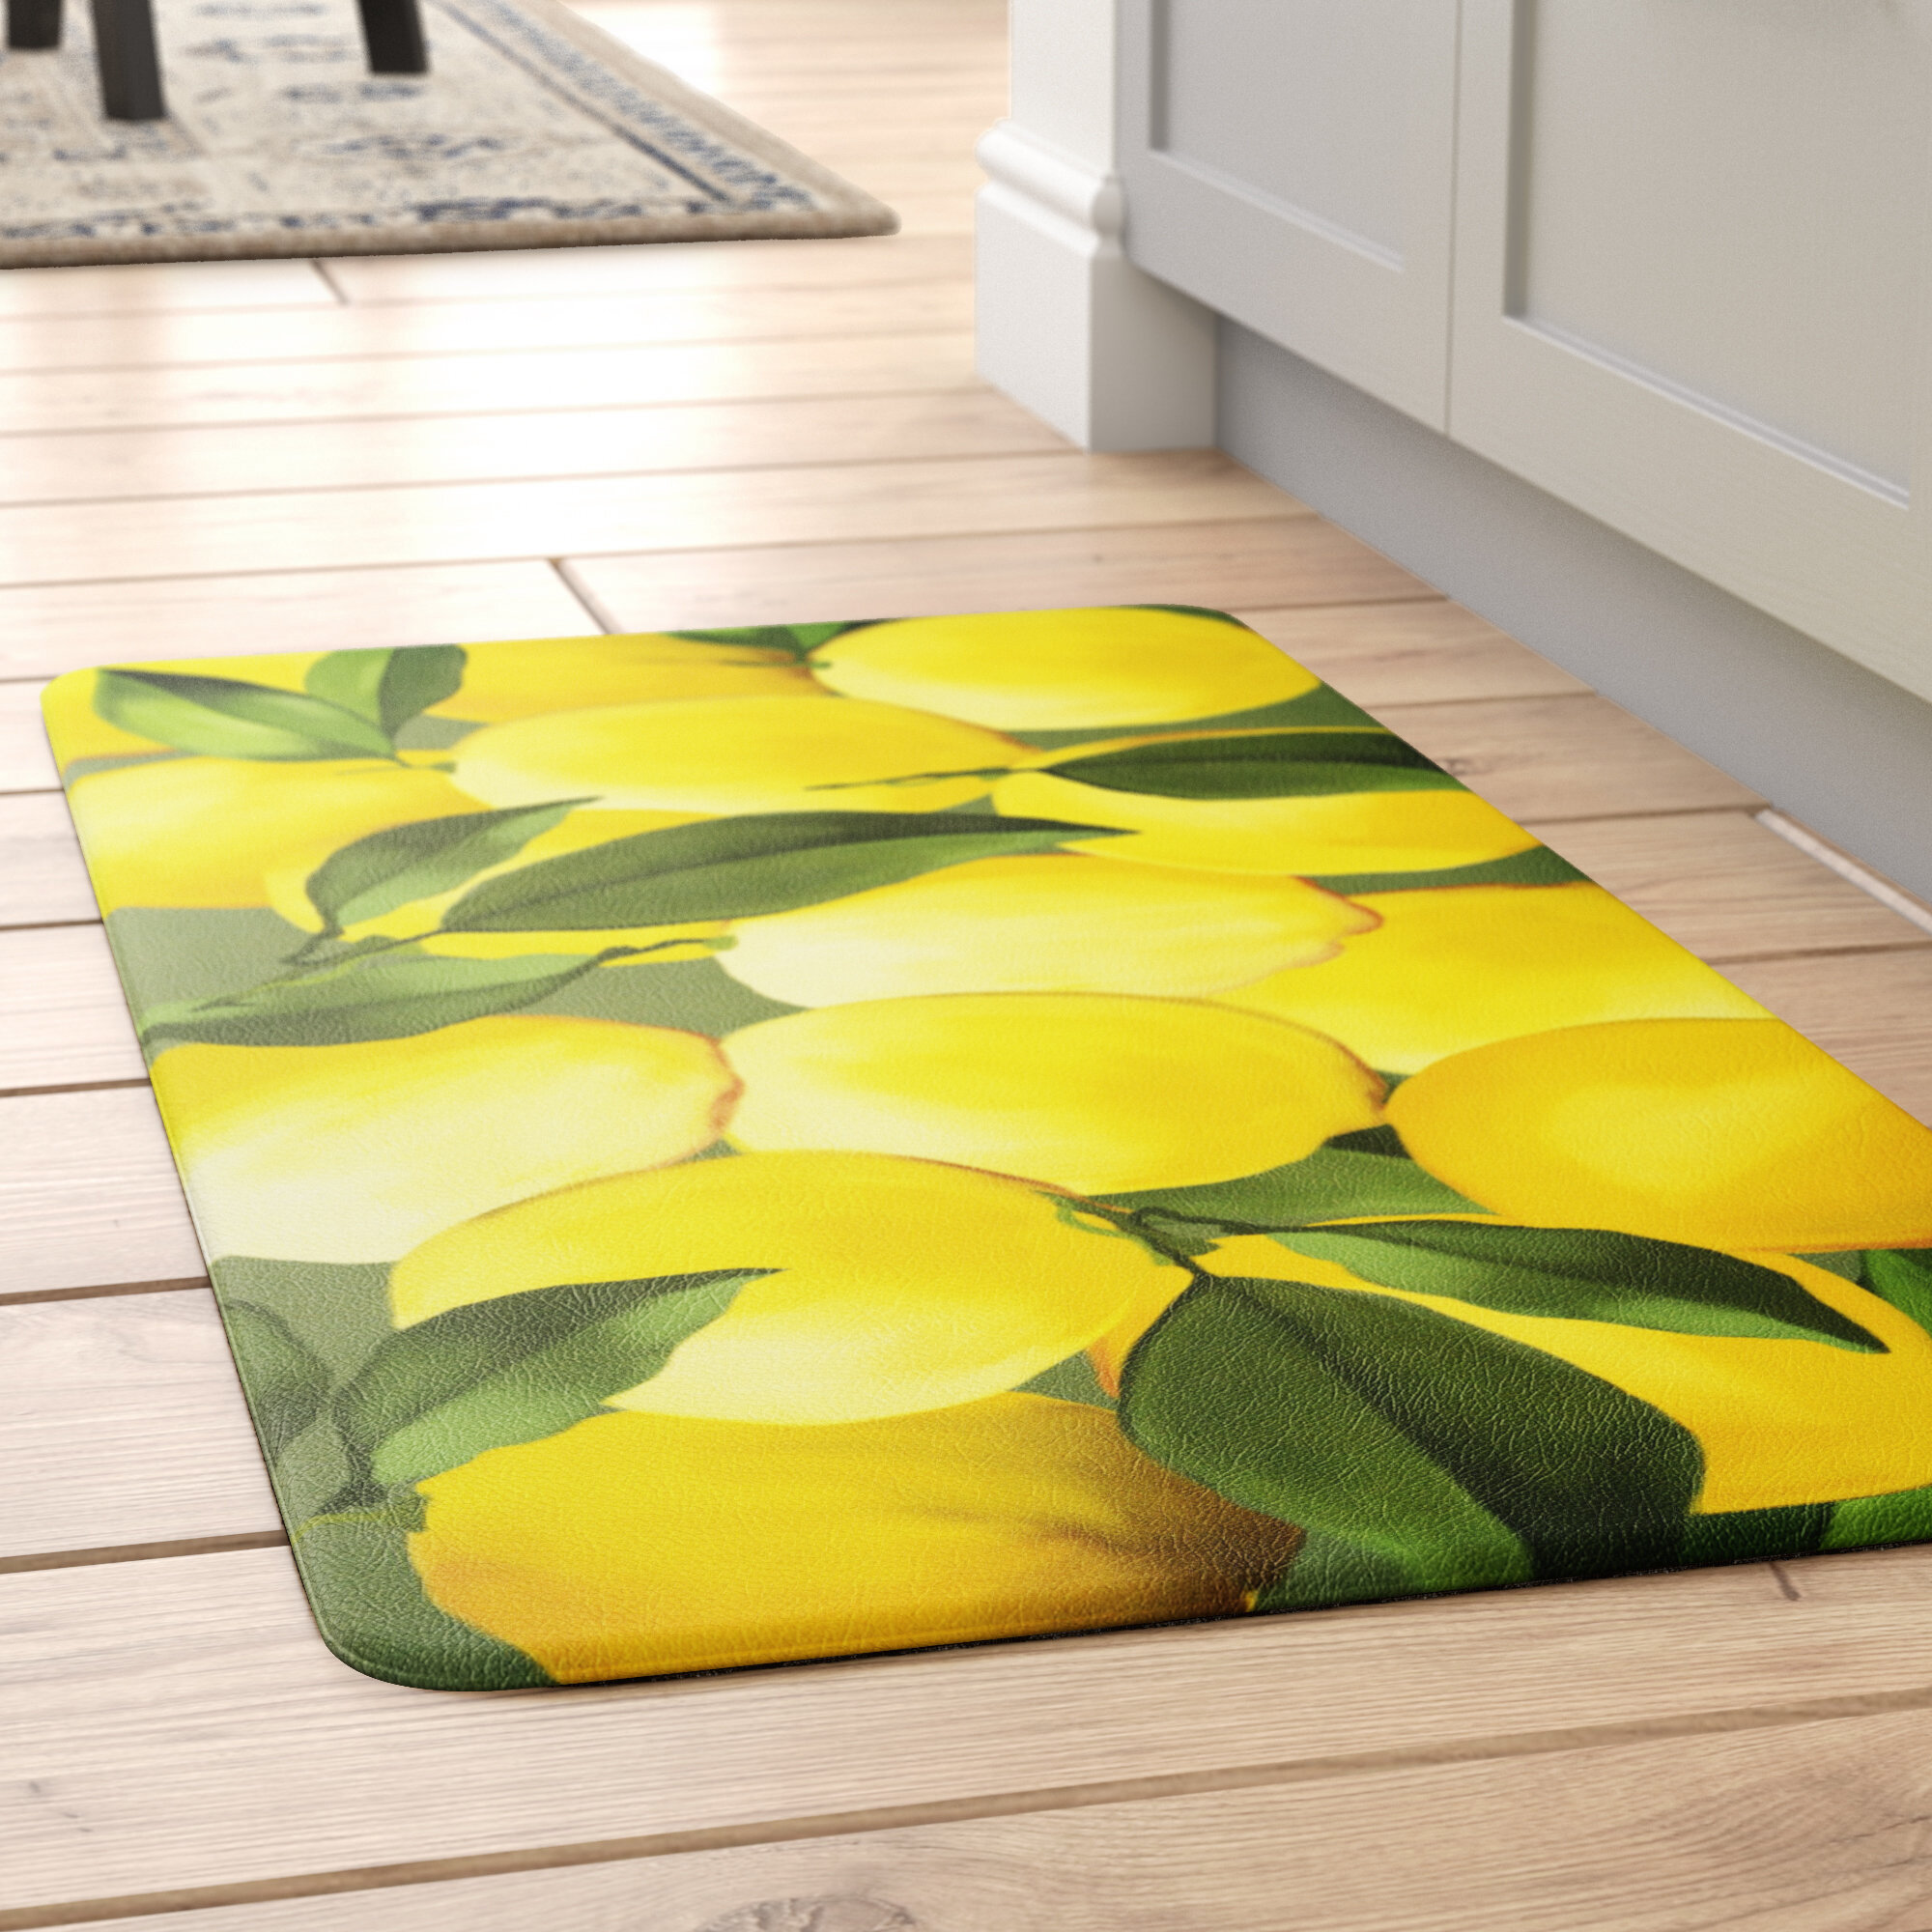 Quality Thick Braided indoor/kitchen floor mat 